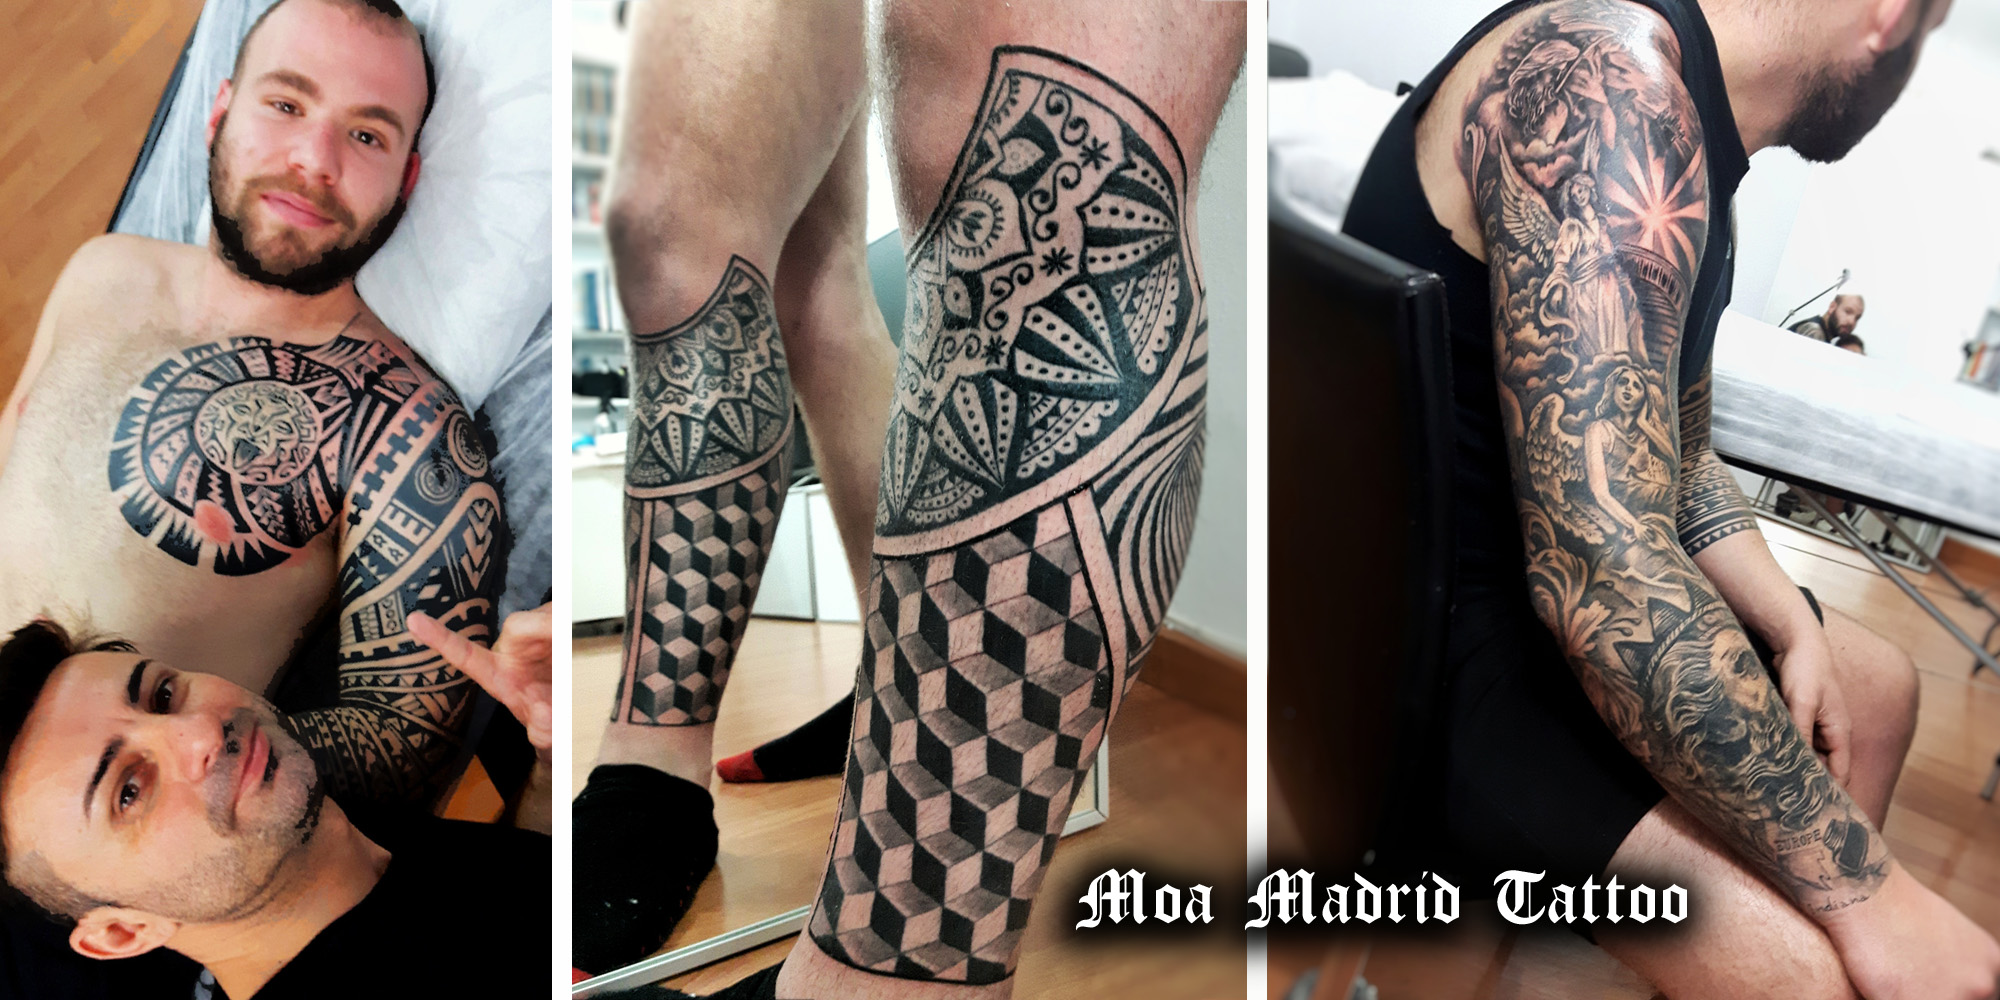 Opiniones de clientes sobre Moa Madrid Tattoo - Clientes satisfechos vuelven: 4 GRANDES tatuajes.jpg